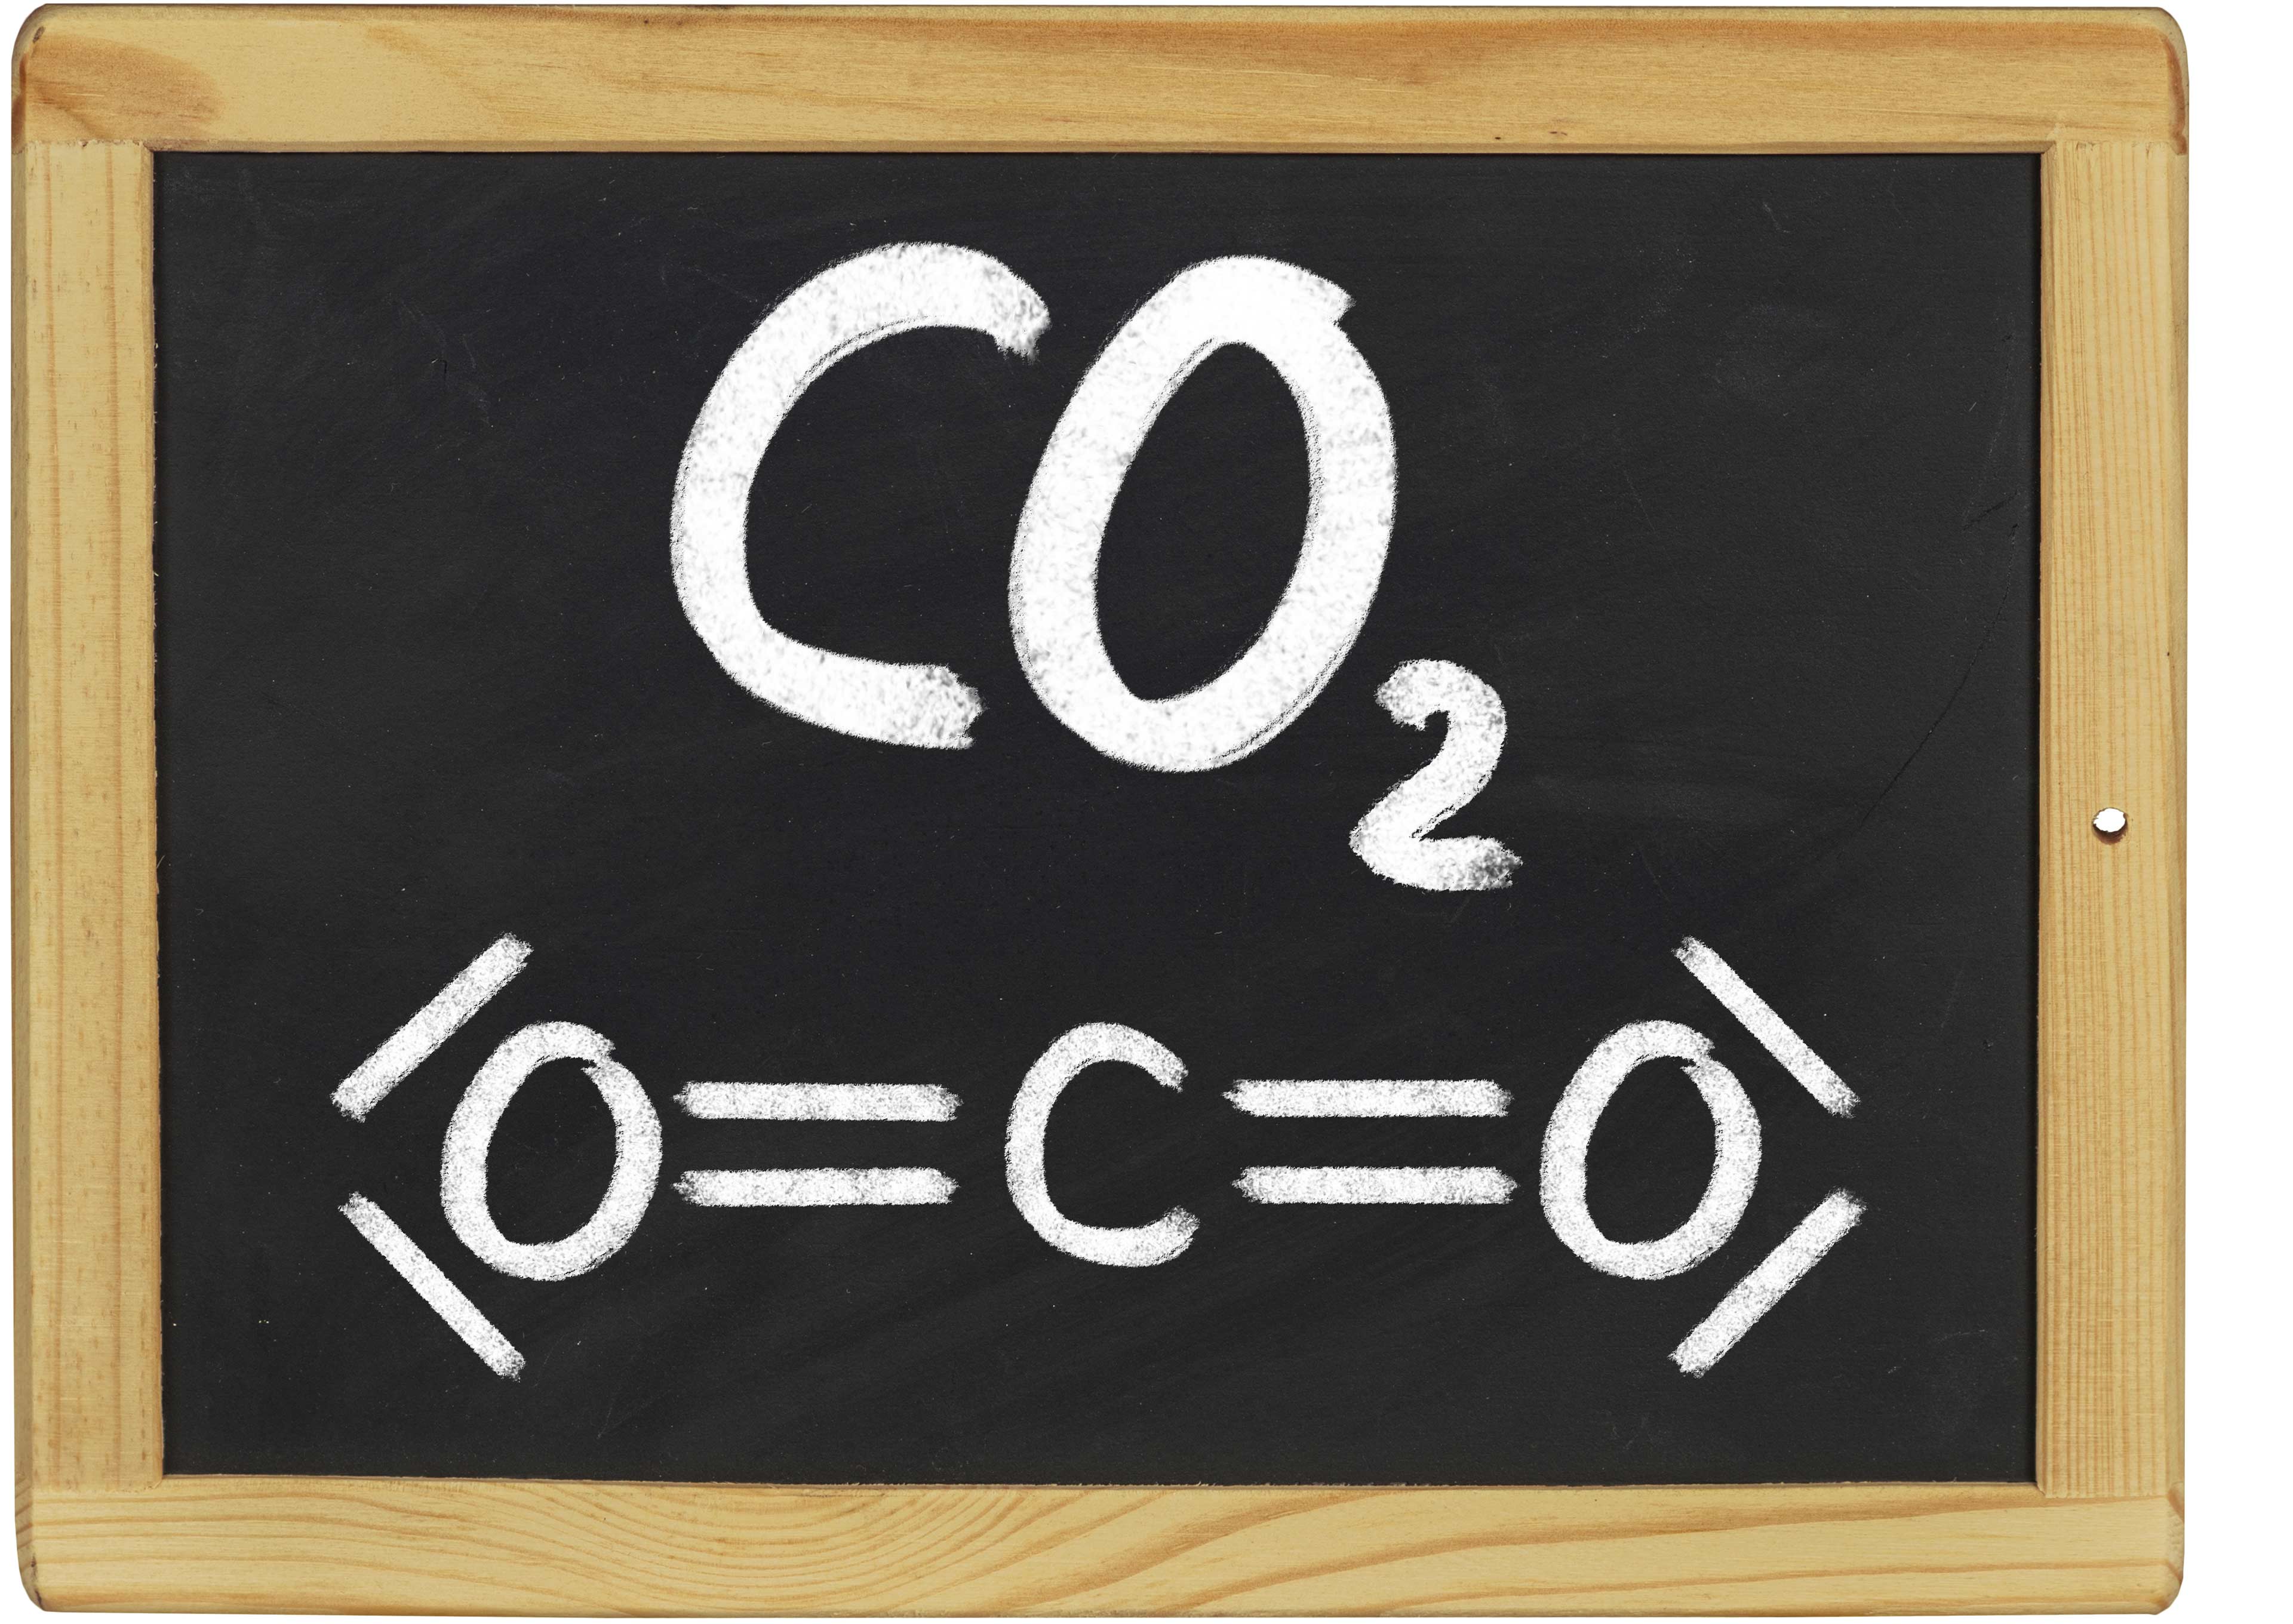 CO2 formula